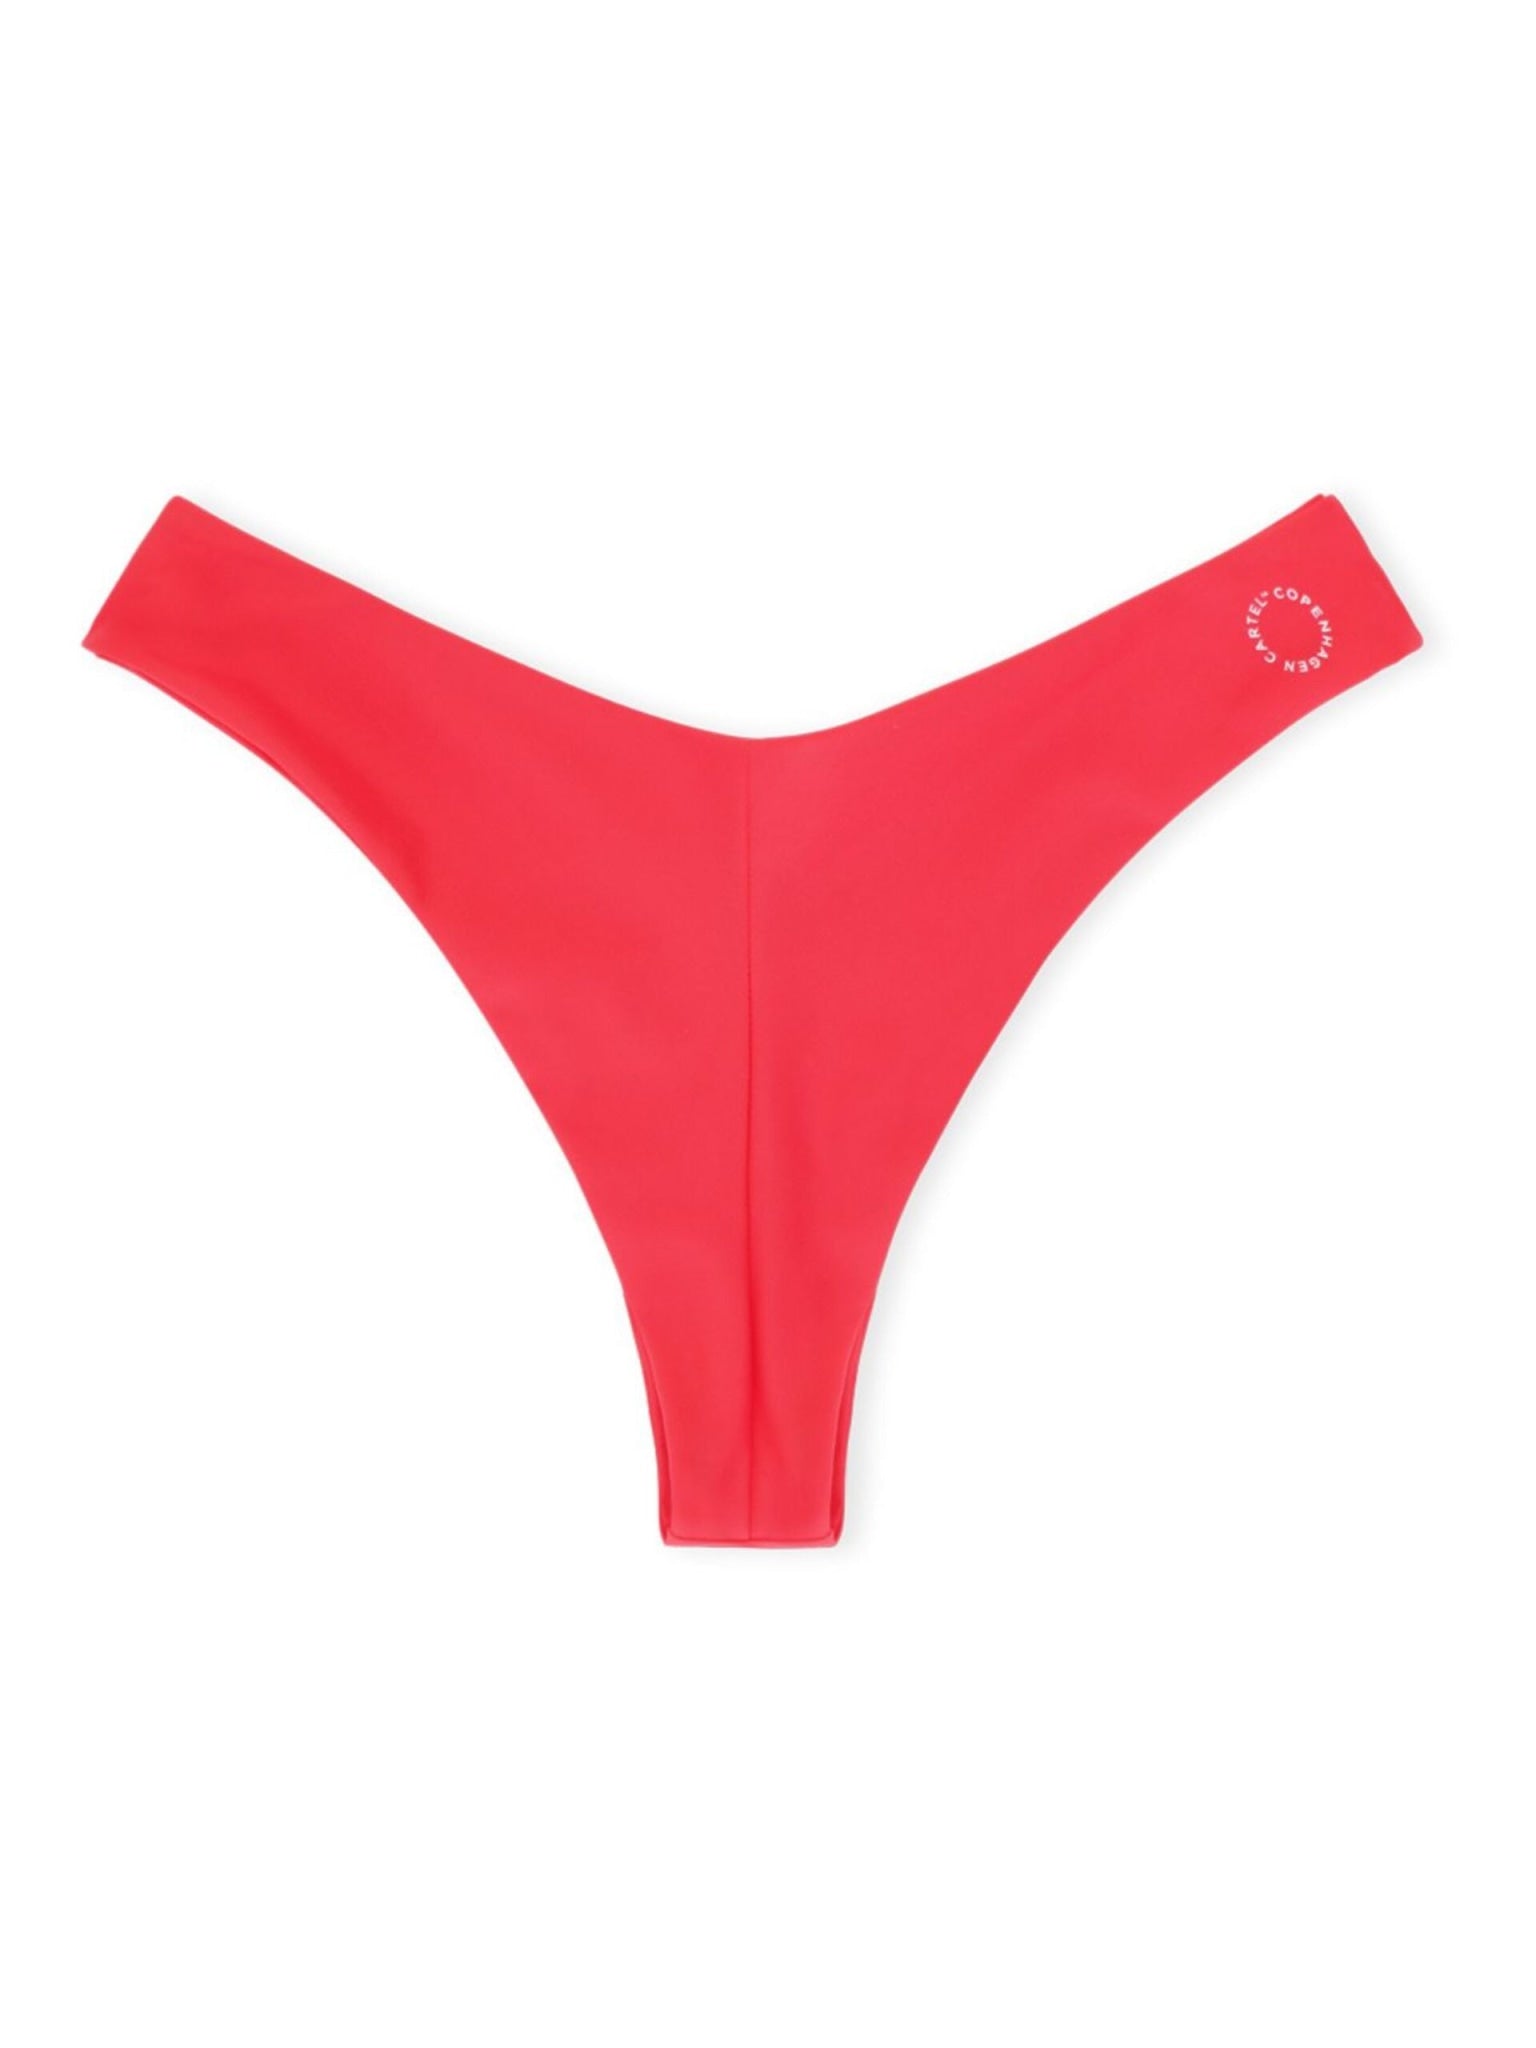 Canggu V-shaped bikini bottom - Heat